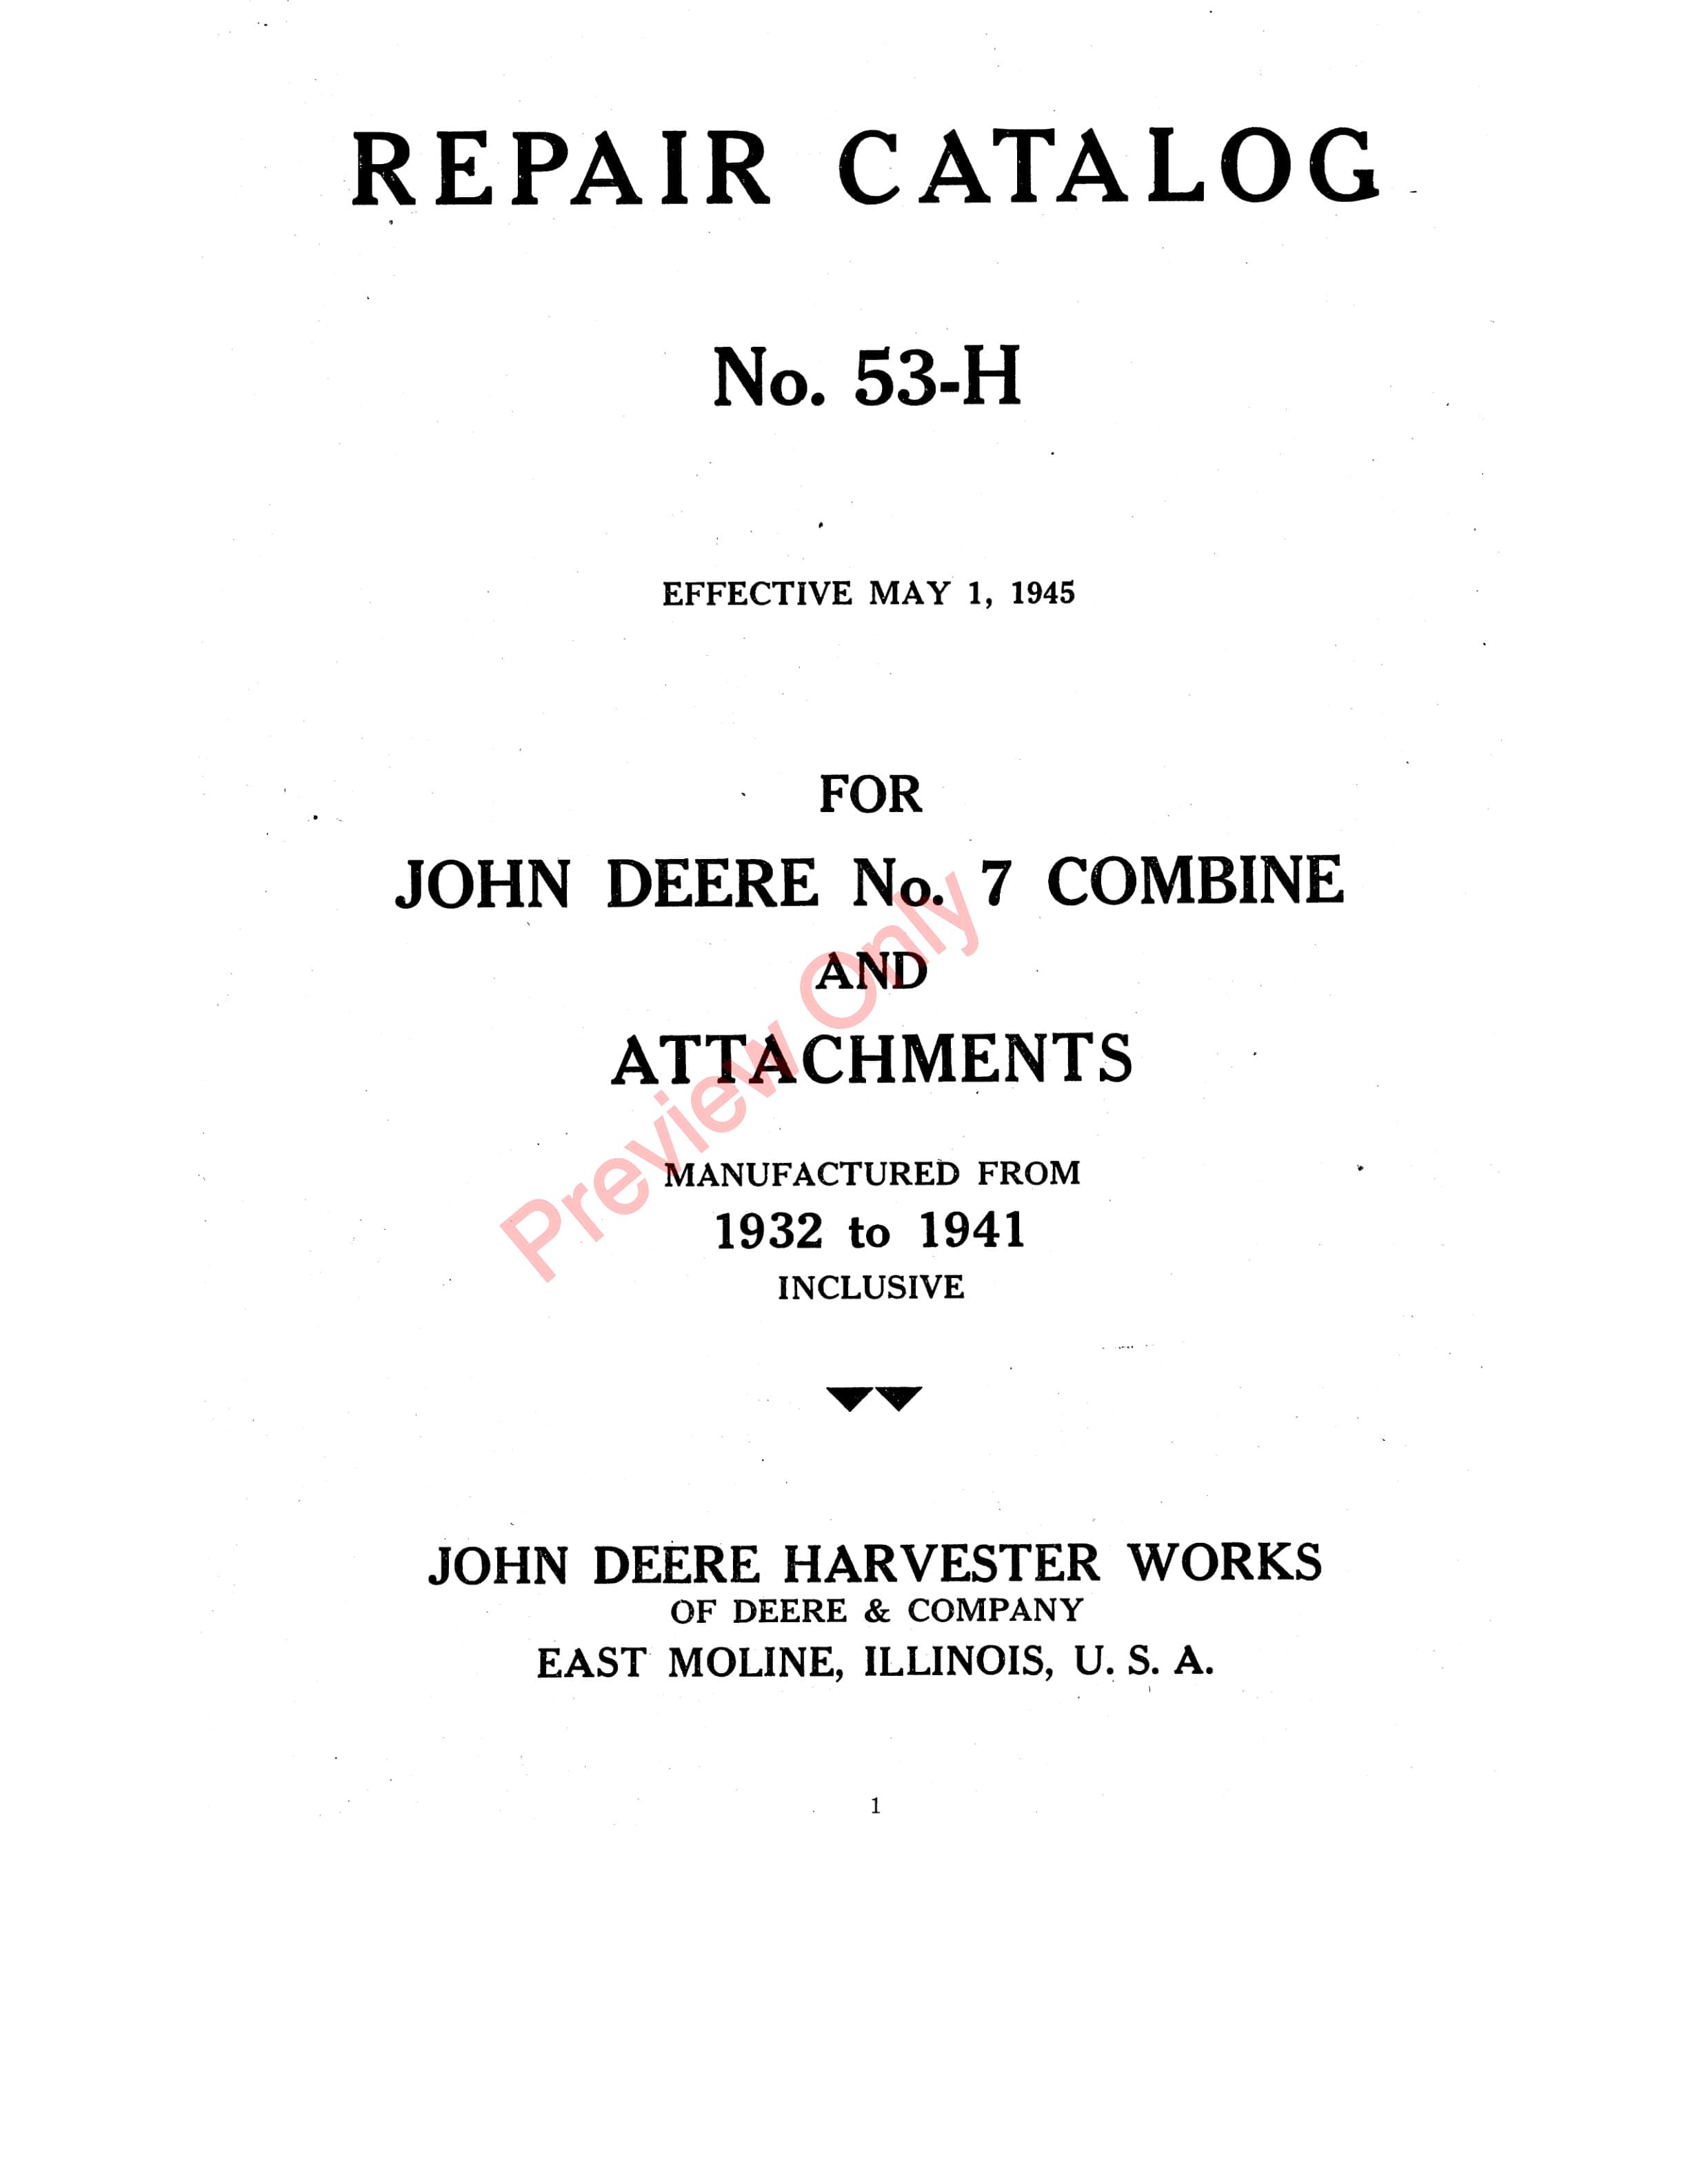 John Deere No. 7 Combine And Attachments Parts Catalog CAT53H 01MAY45 5